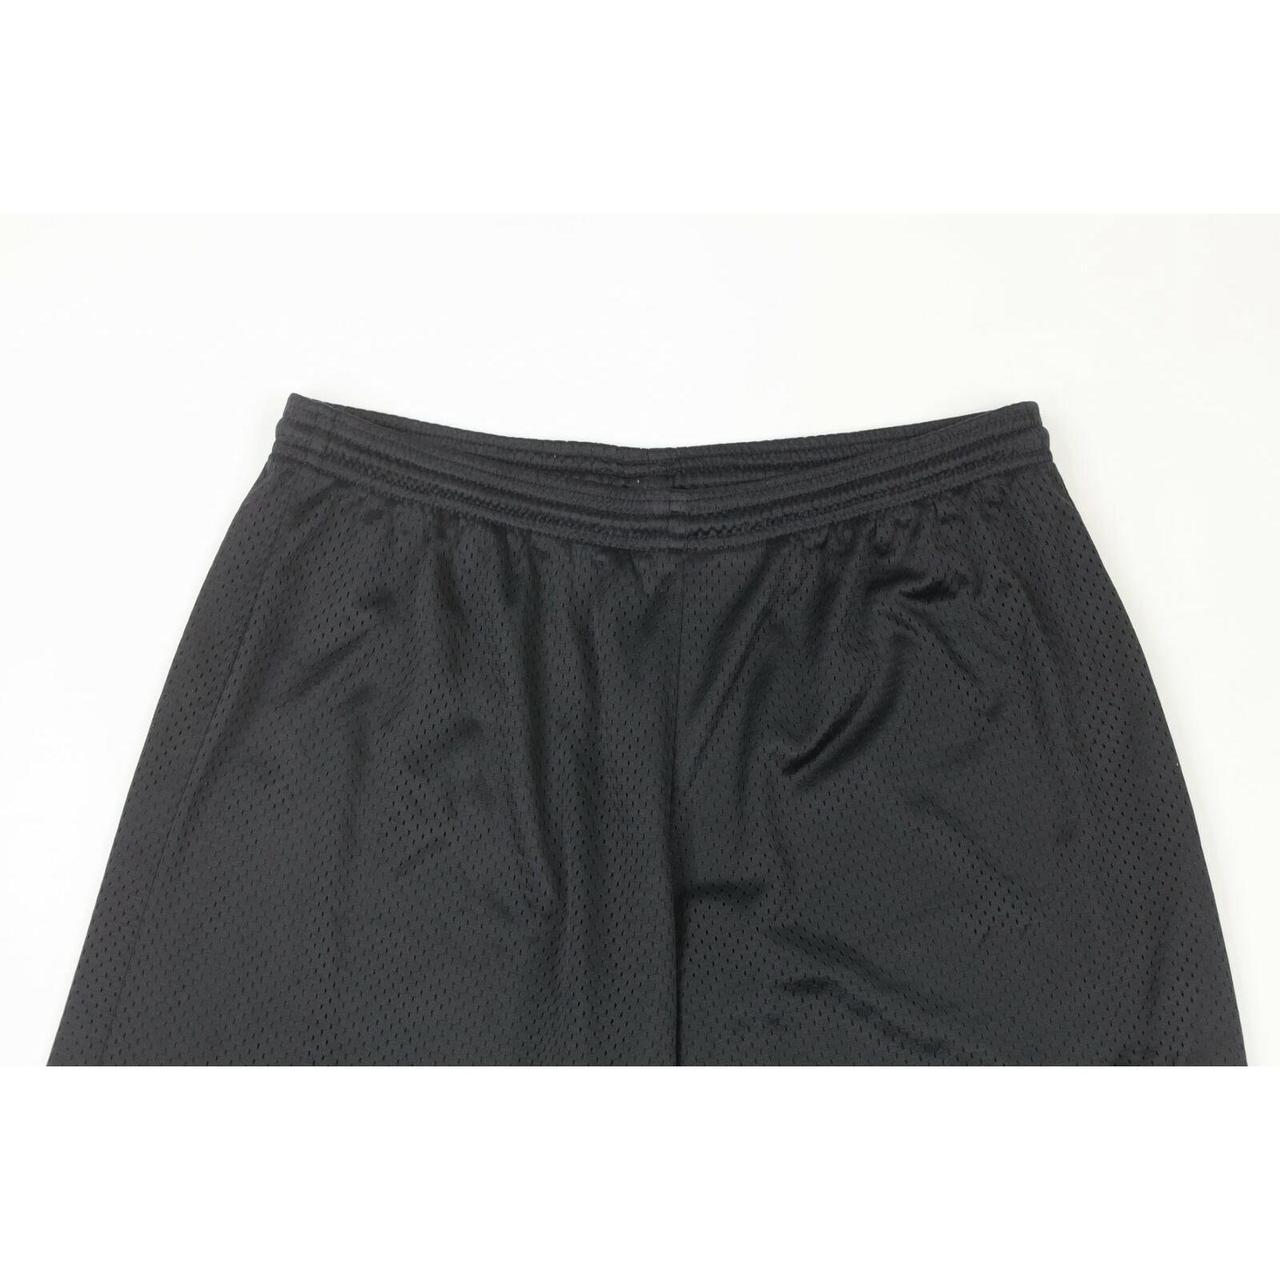 Converse Men's Black Shorts (2)